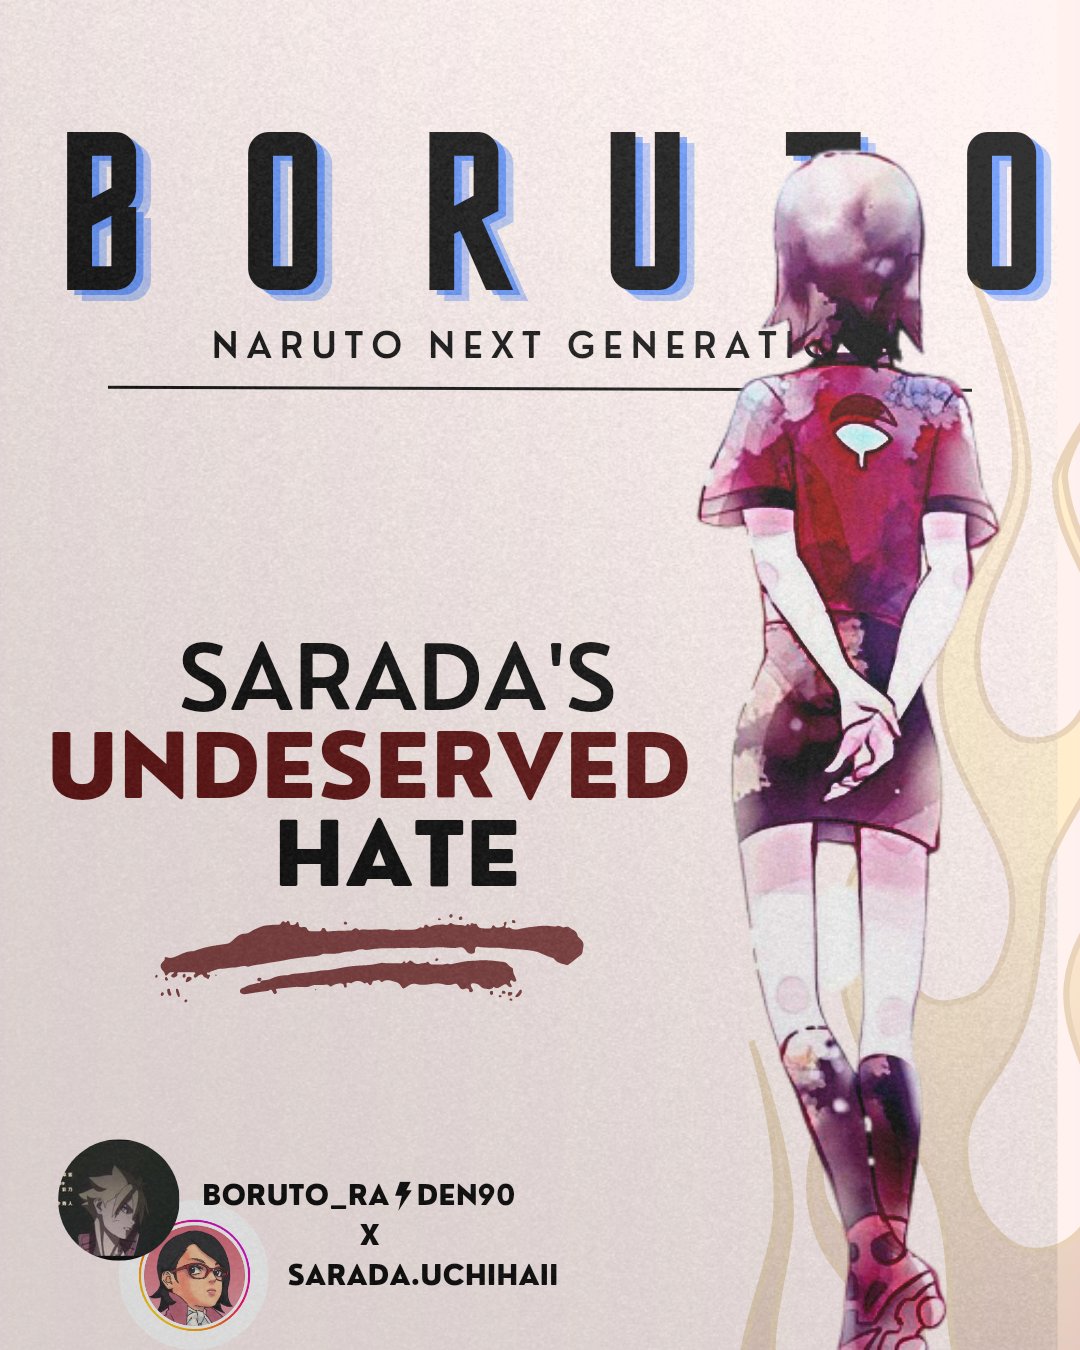 Boruto Raiden⚡ on X: THREAD ABOUT SARADA'S POTENTIAL MANGEKYOU SHARINGAN  ABILITY ( JUST A THEORY that I made for #saradamsevent on Instagram) #sarada  #saradauchiha #BORUTO  / X